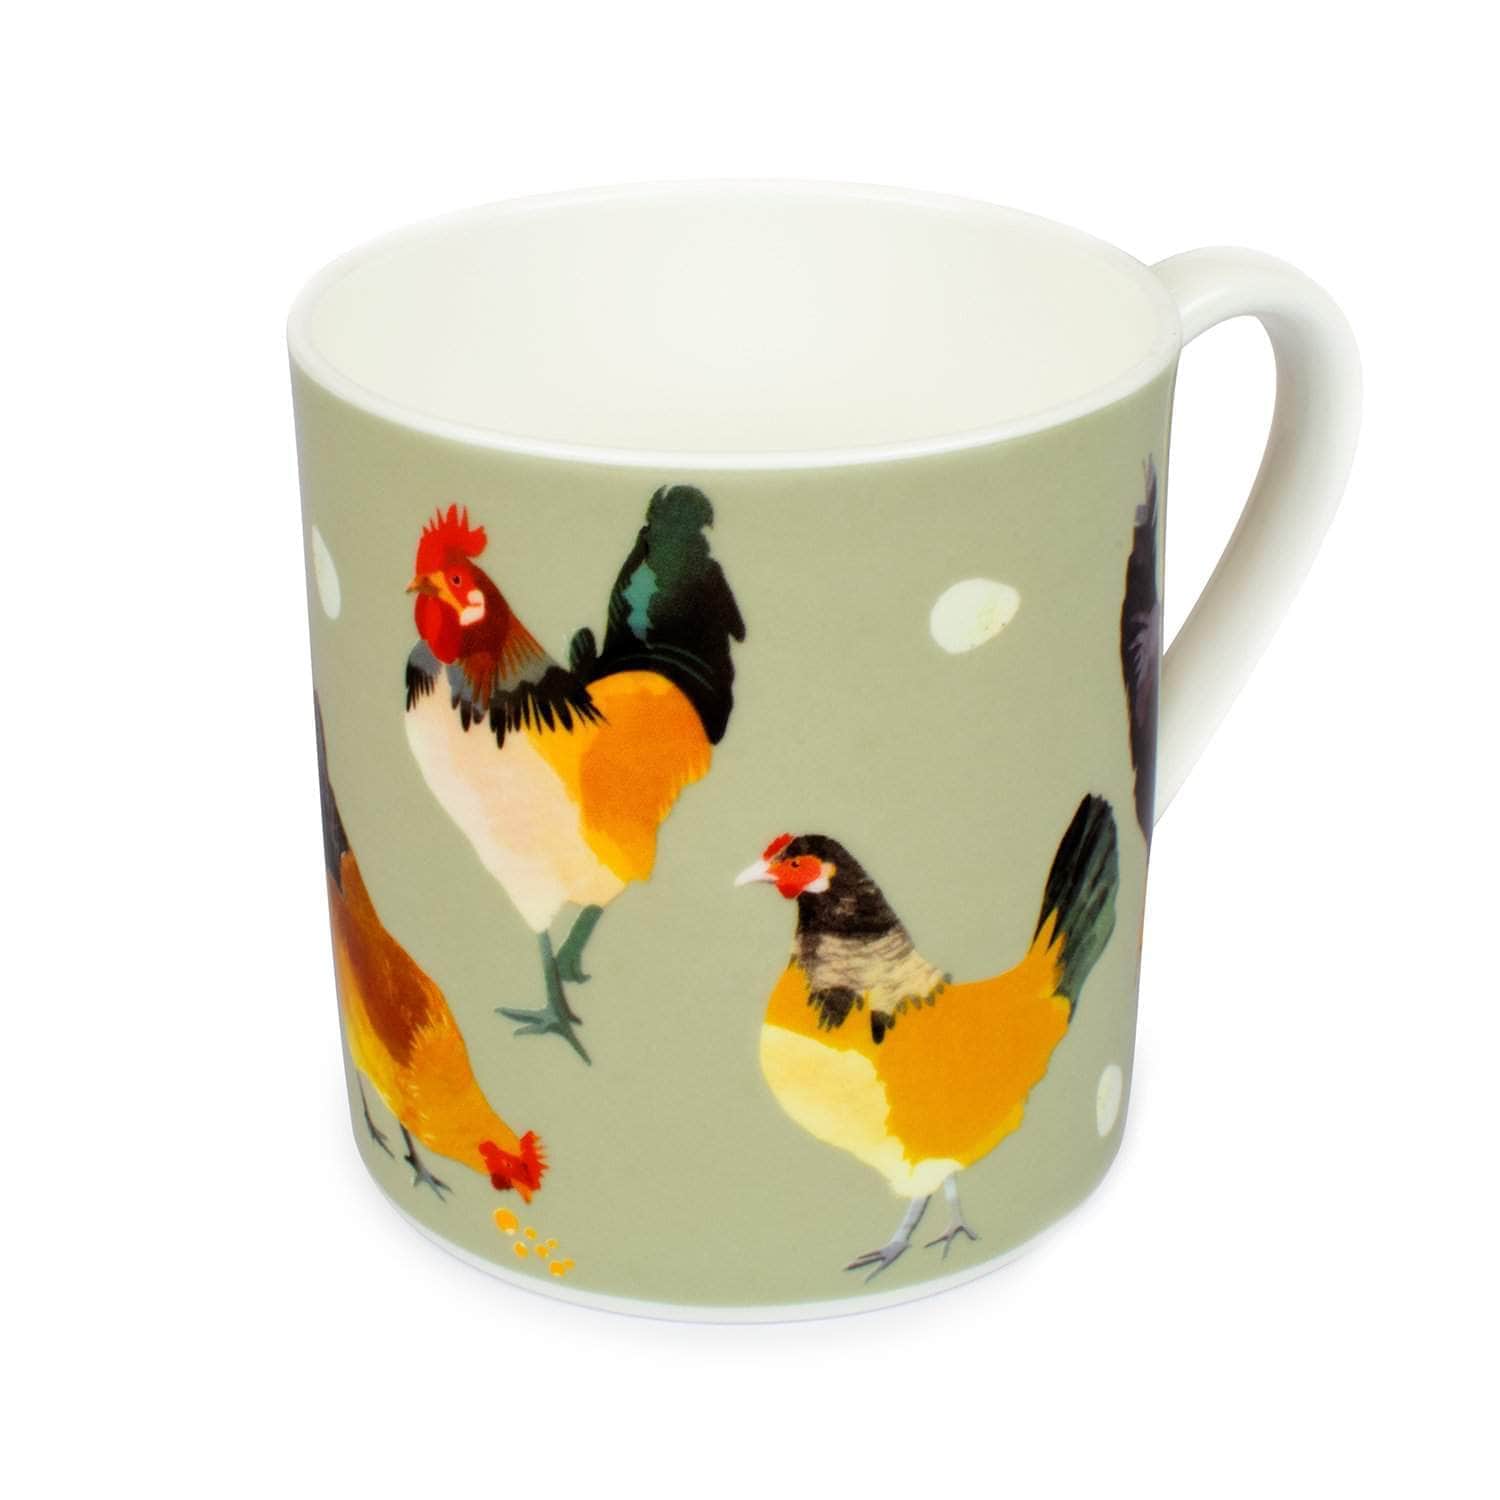 *New* Fine bone china Tea/Coffee mug - 'The Chickens'